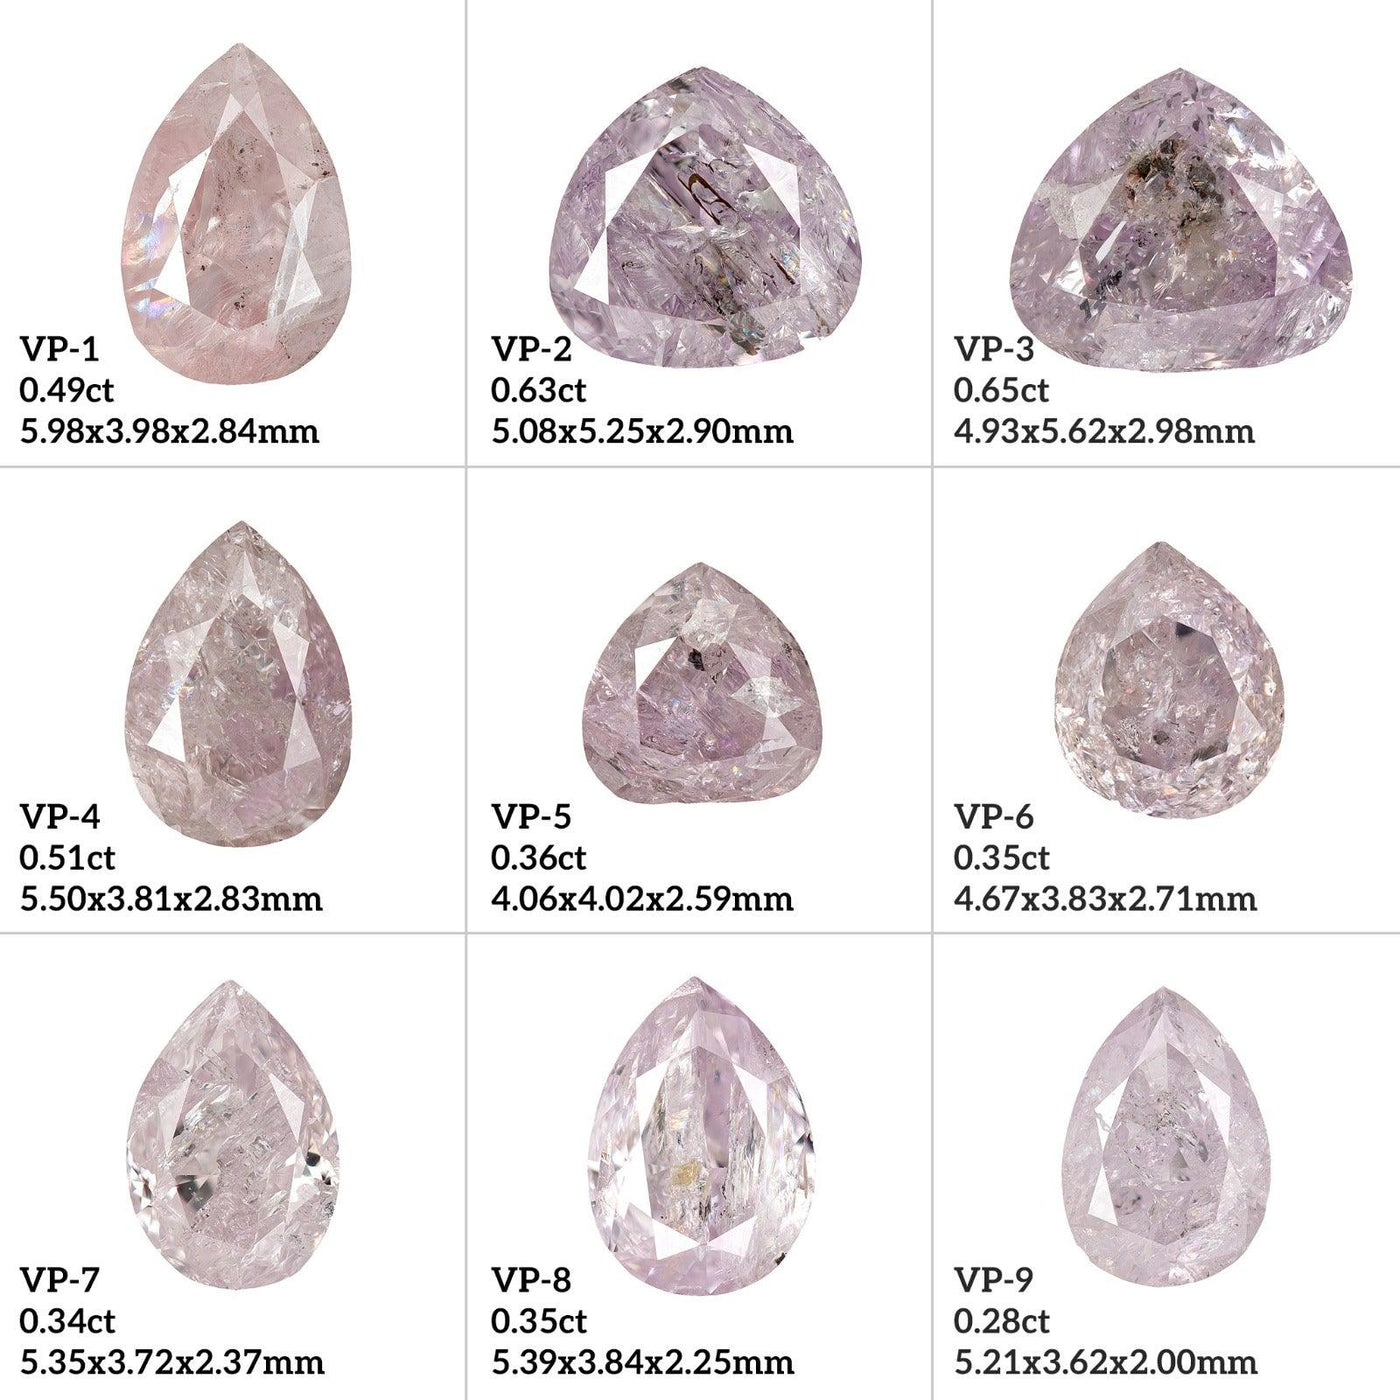 VP2 - Vivid pink pear diamond - Rubysta